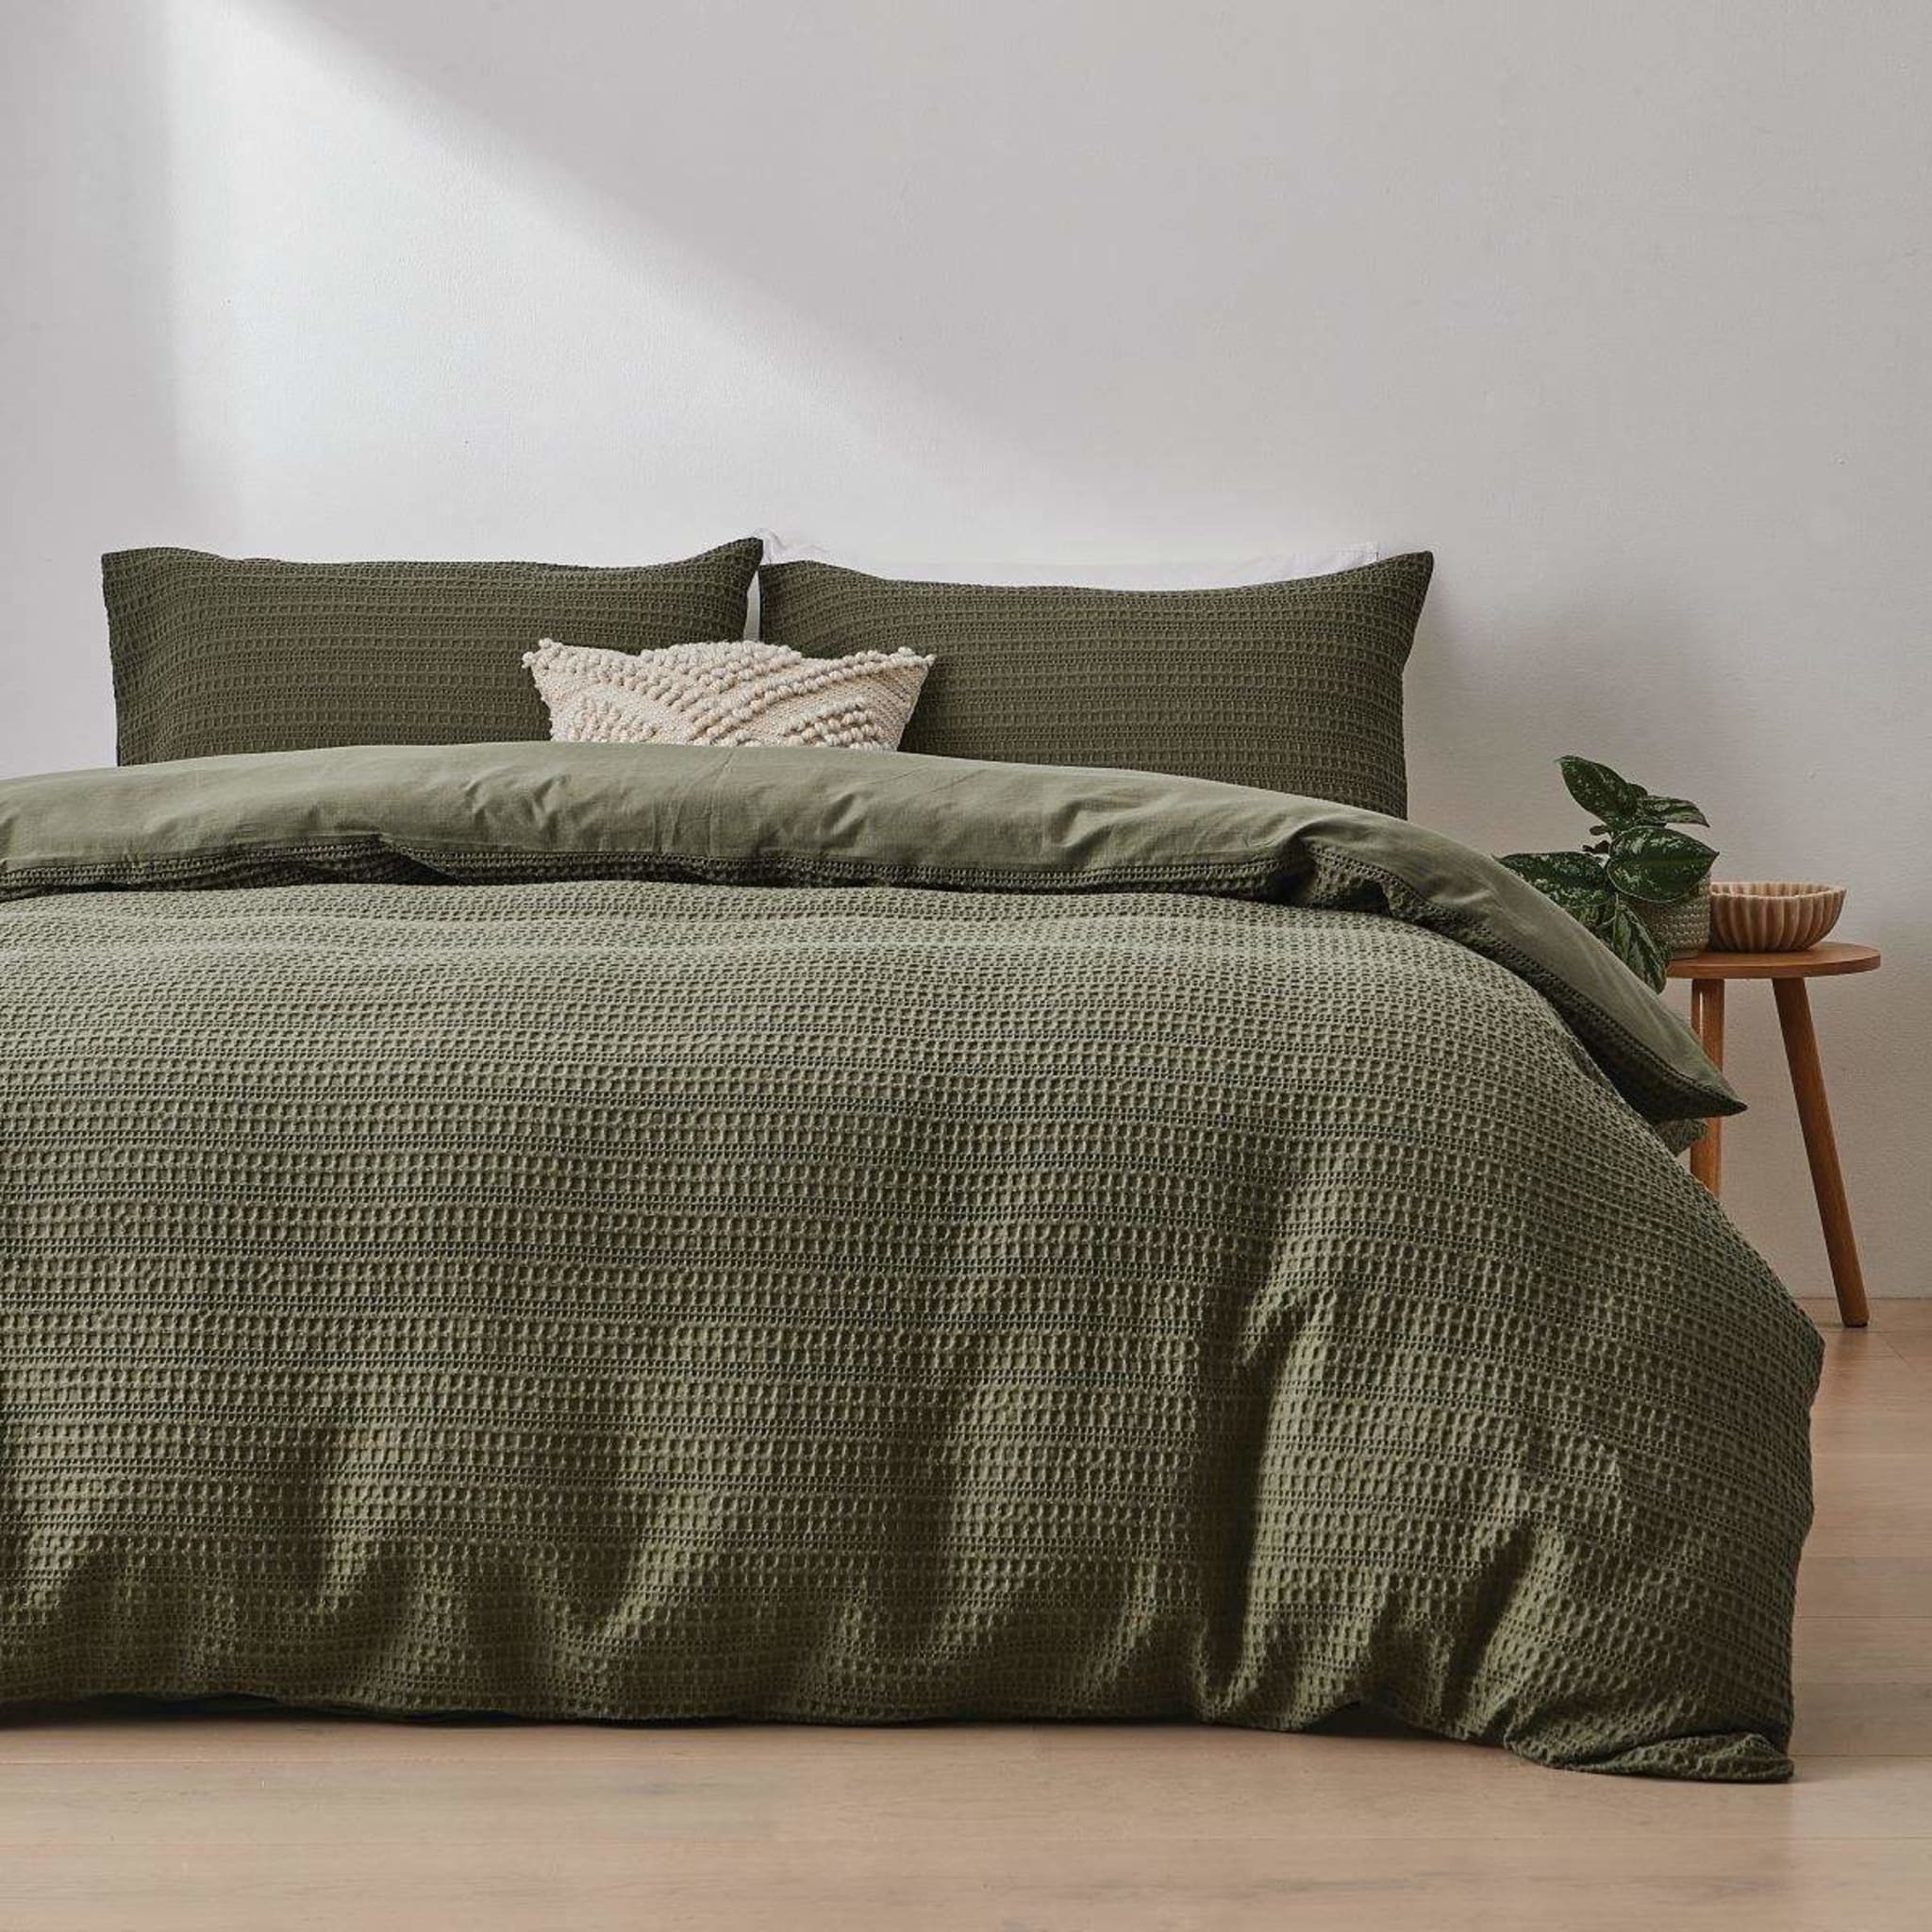 Makena Cotton Quilt Cover Set - Double Bed, Forest - Kmart